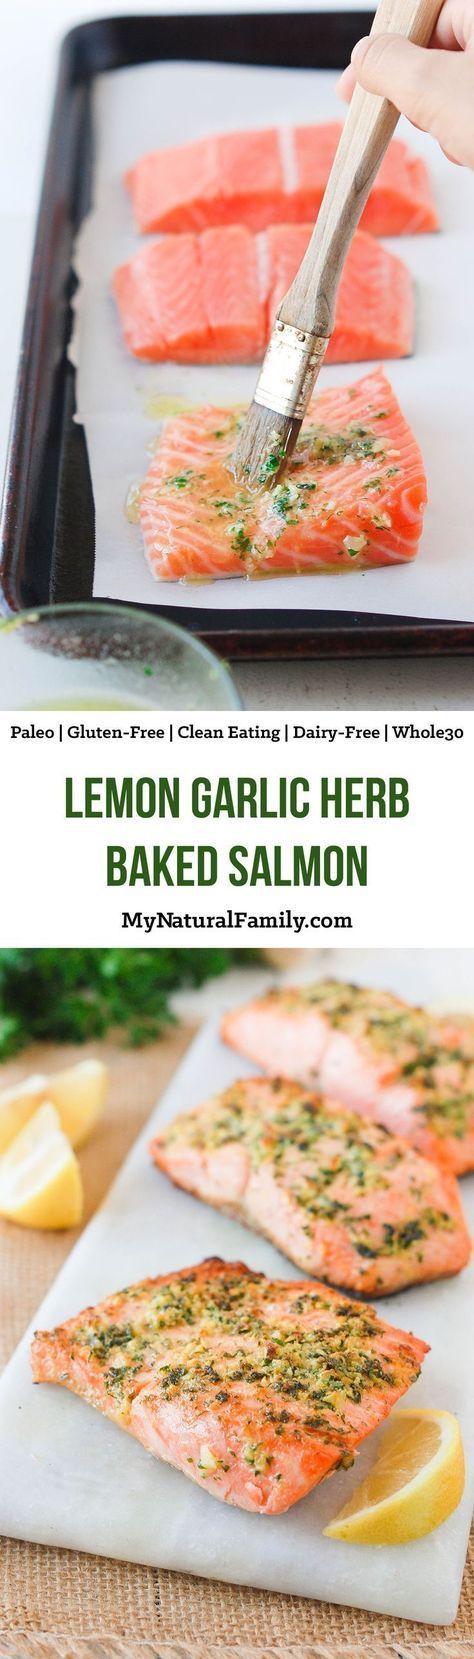 Easy Baked Fish Recipe – Lemon Garlic Herb Crusted Salmon Recipe {Paleo, Whole30, Gluten-Free, Clean Eating, Dairy-Free}